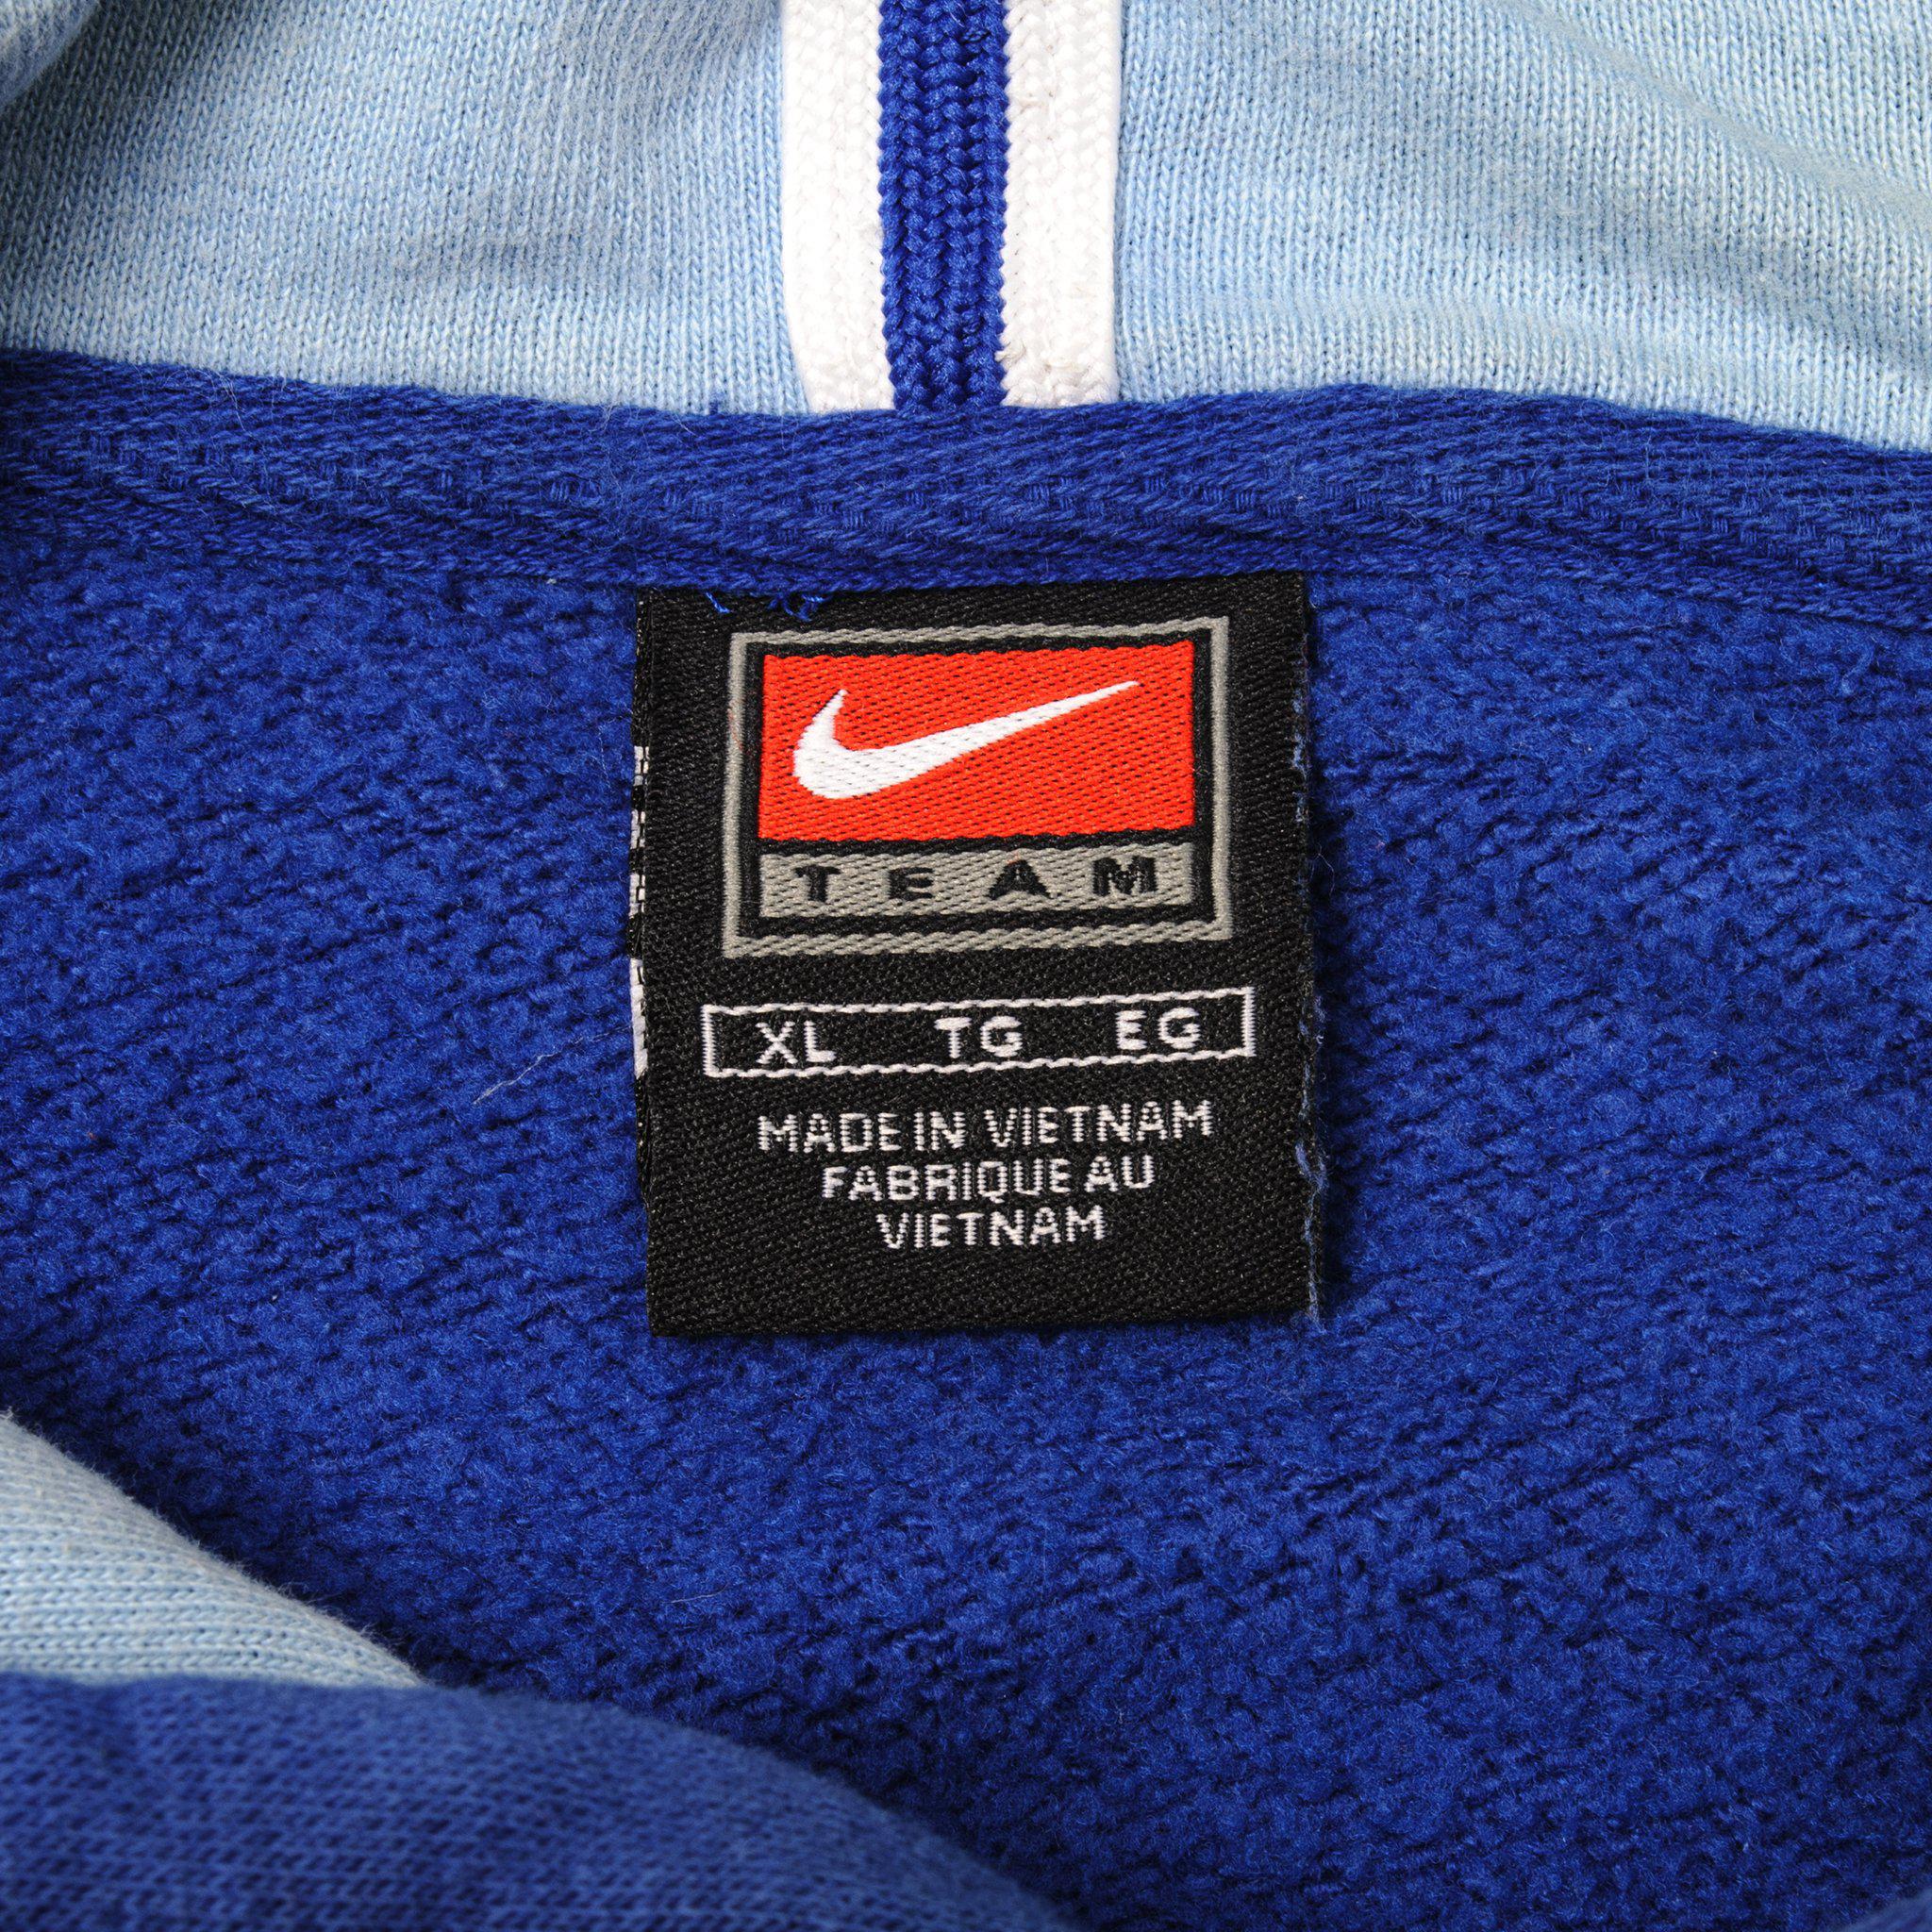 Los Angeles Lakers Nike Sweatshirt 00's - XL – Lot 1 Vintage